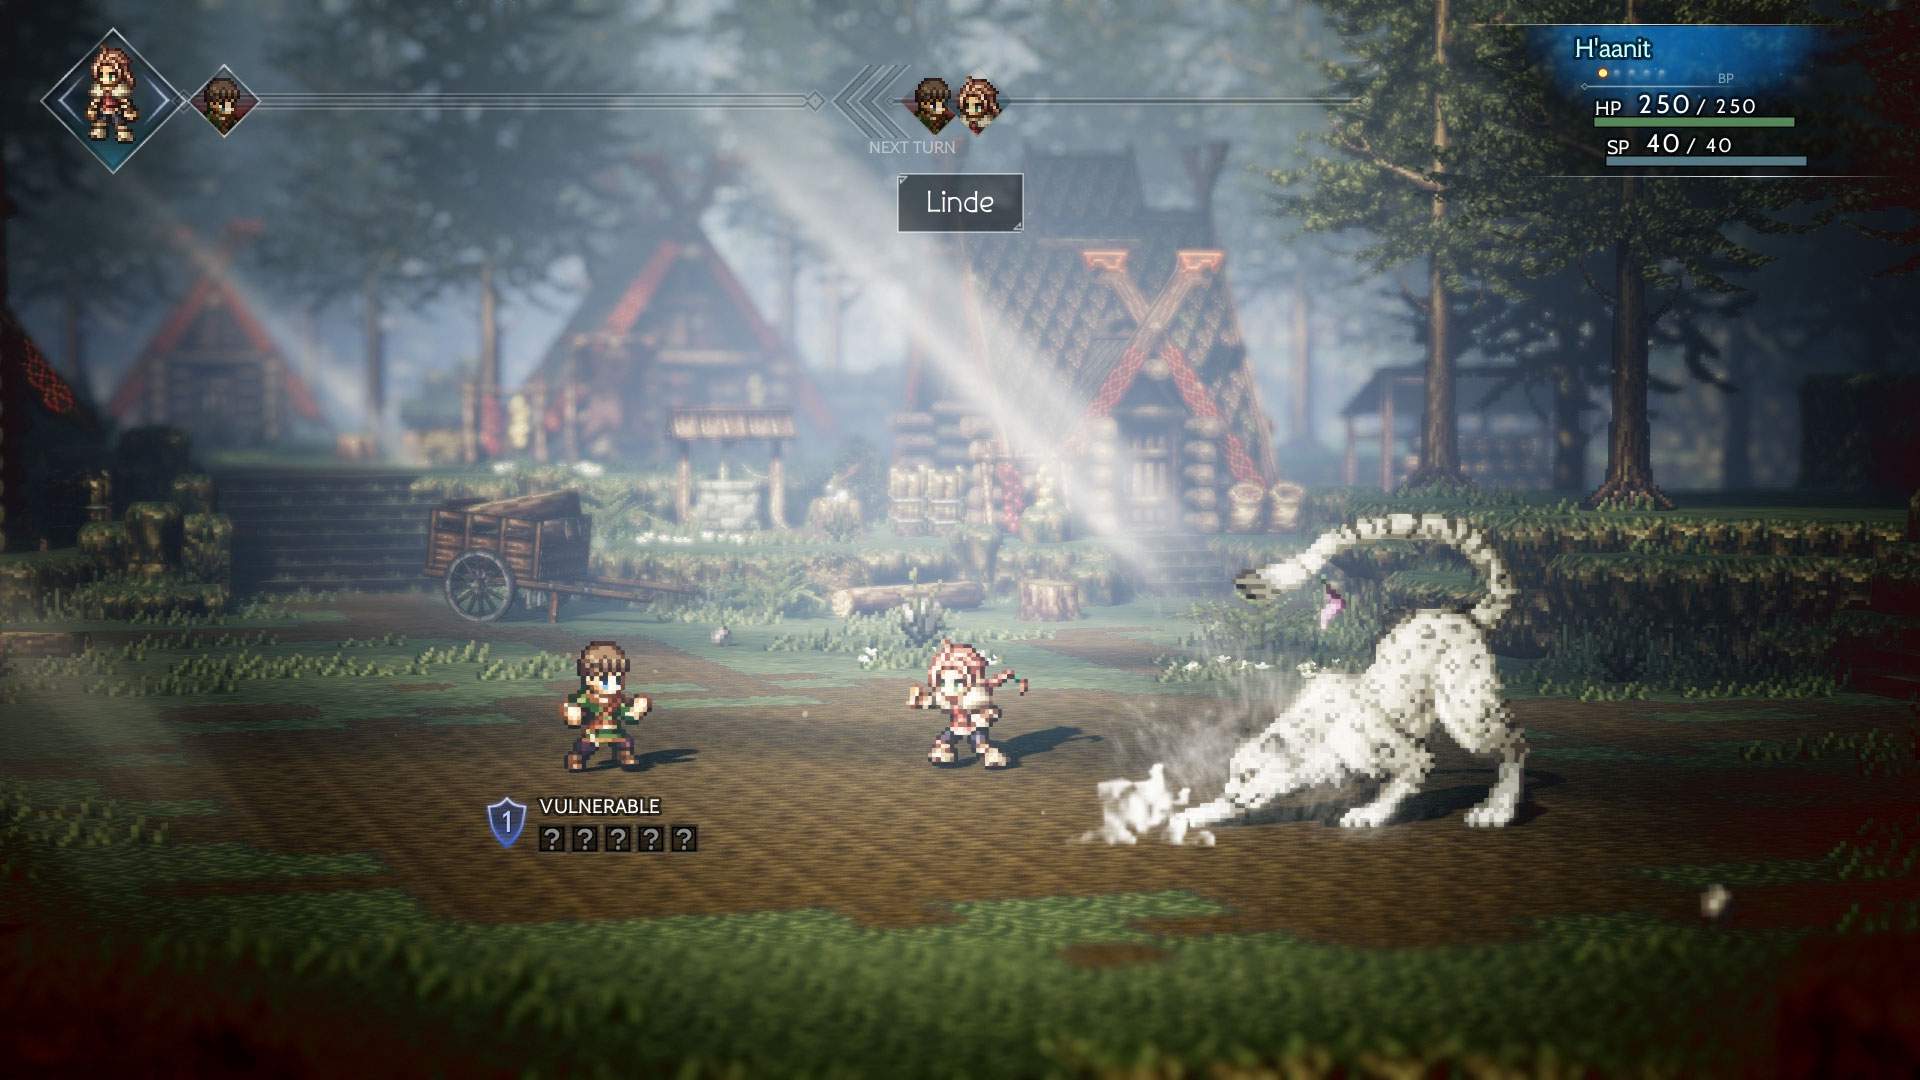 In game battle screenshot showing H'aanit in turn based battle on a farm